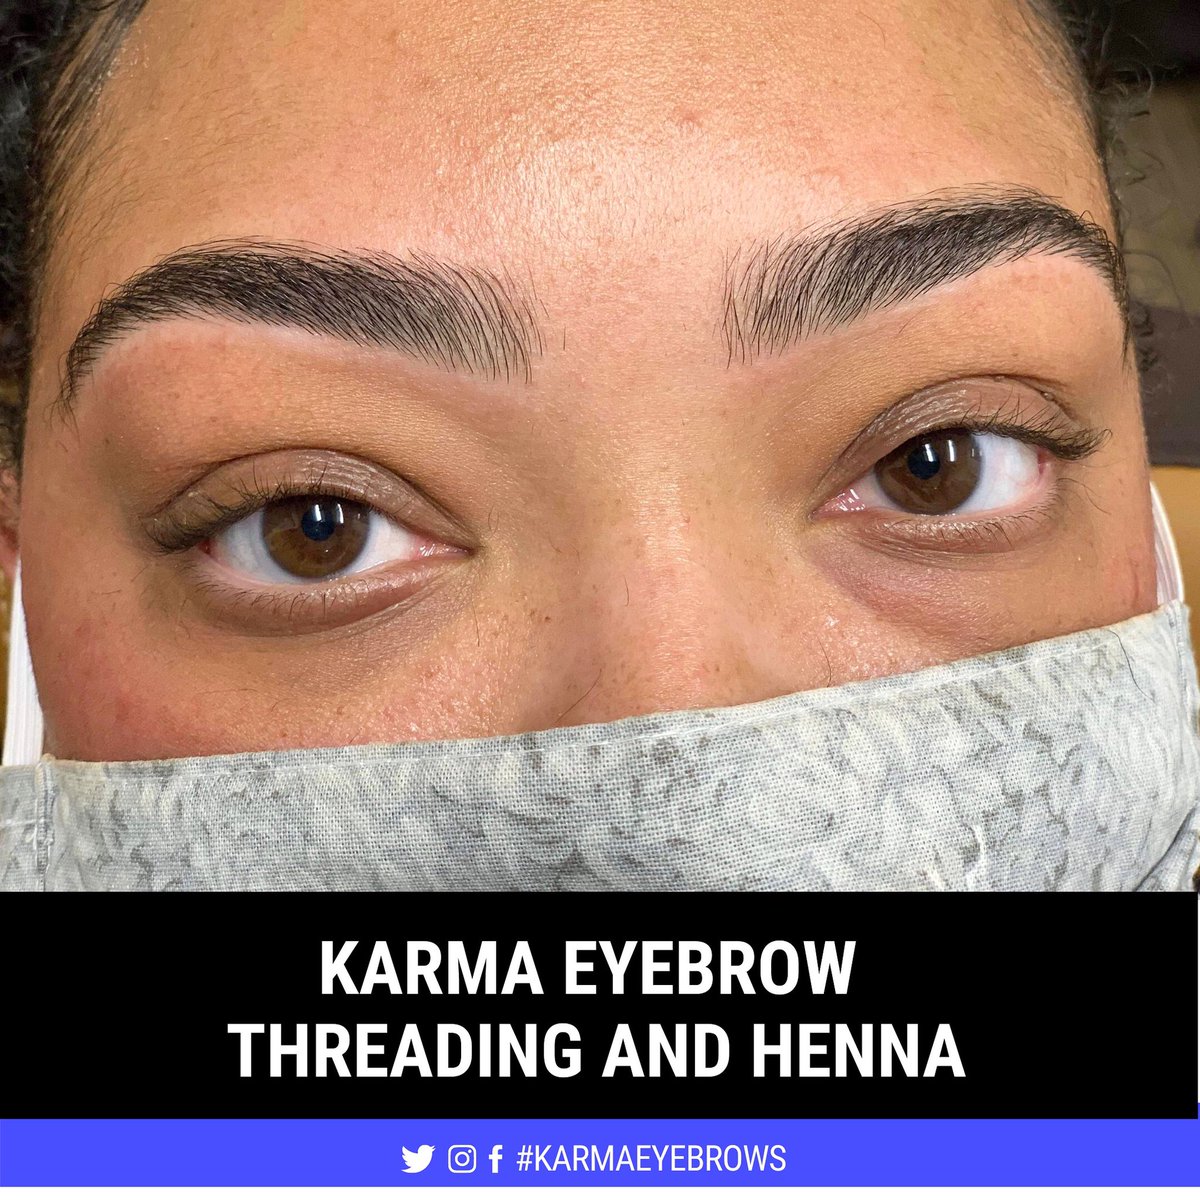 Many prefer threading for shaping their eyebrows because the technique is so precise.✅😷
•
•
•
➡️Salon Plaza Lanham
➡️Salon Plaza Clinton 
•
•
•
#karmaeyebrows #karmaeyebrowthreading #eyebrows #brows #specialist #artofthreading #threading #dmvbeauty #salonplaza #lanham